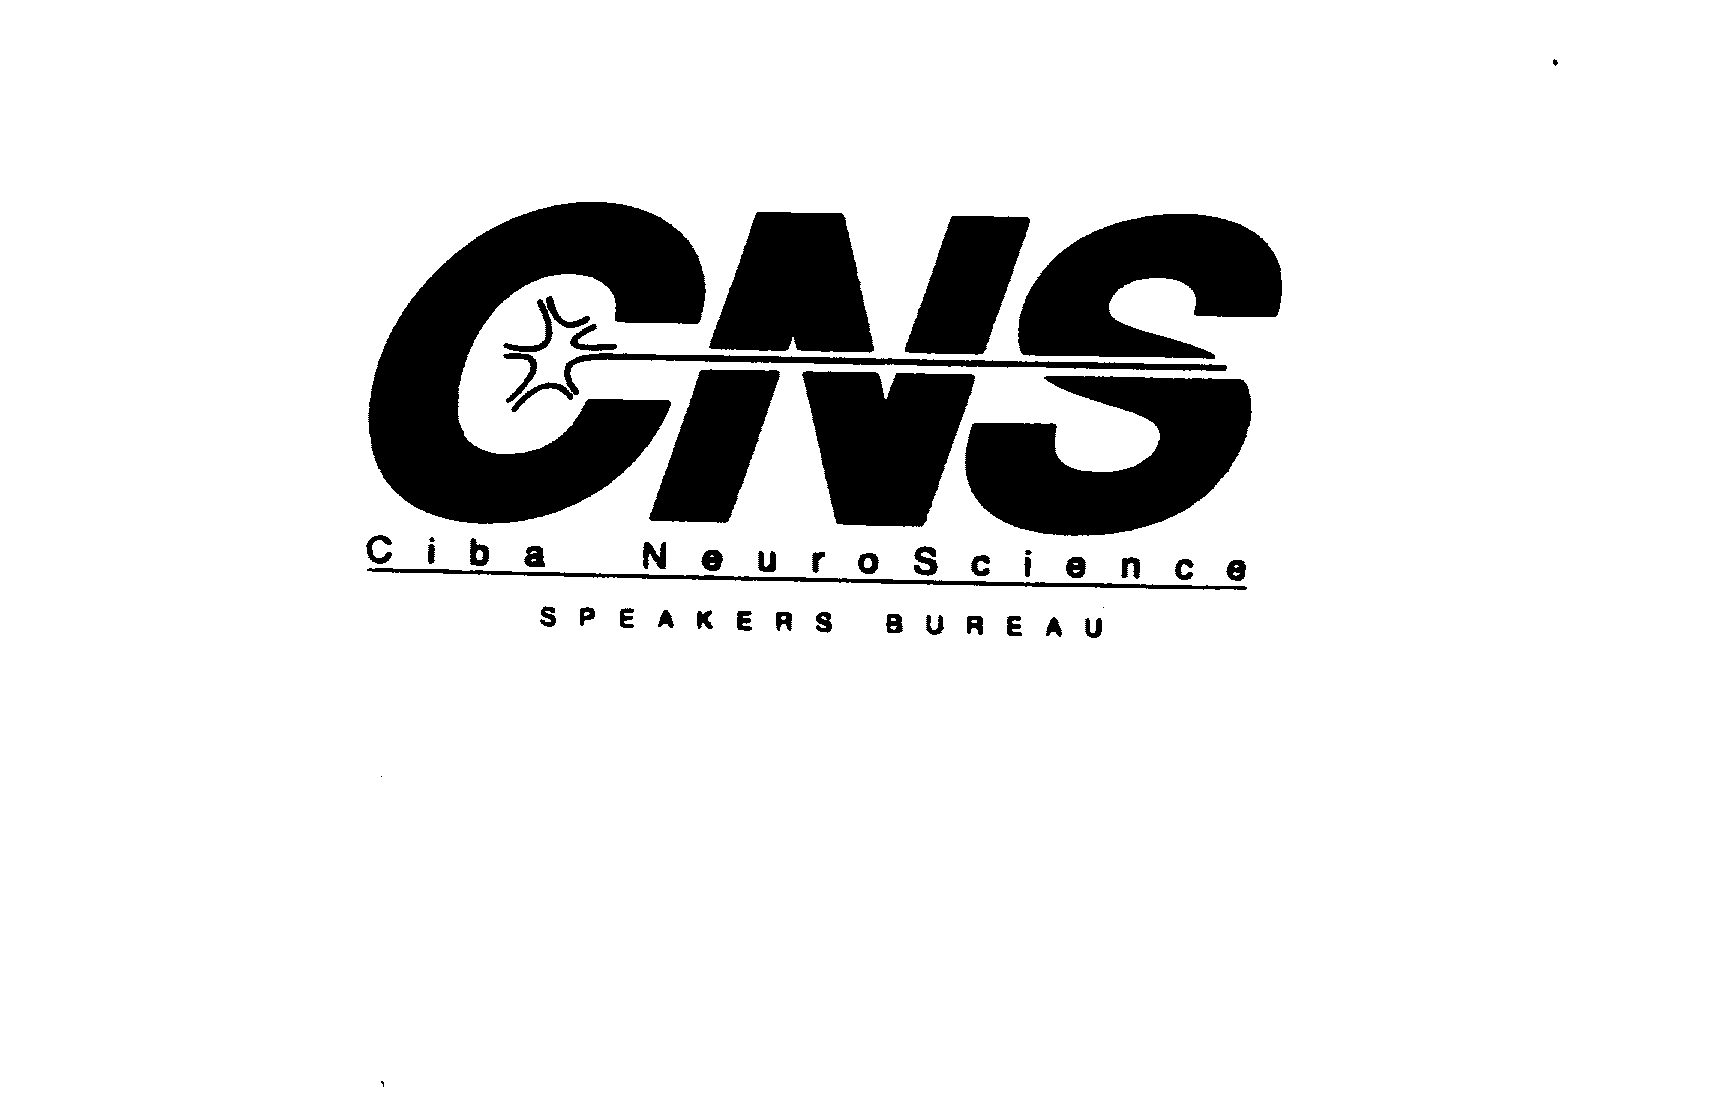  CNS CIBA NEUROSCIENCE SPEAKERS BUREAU